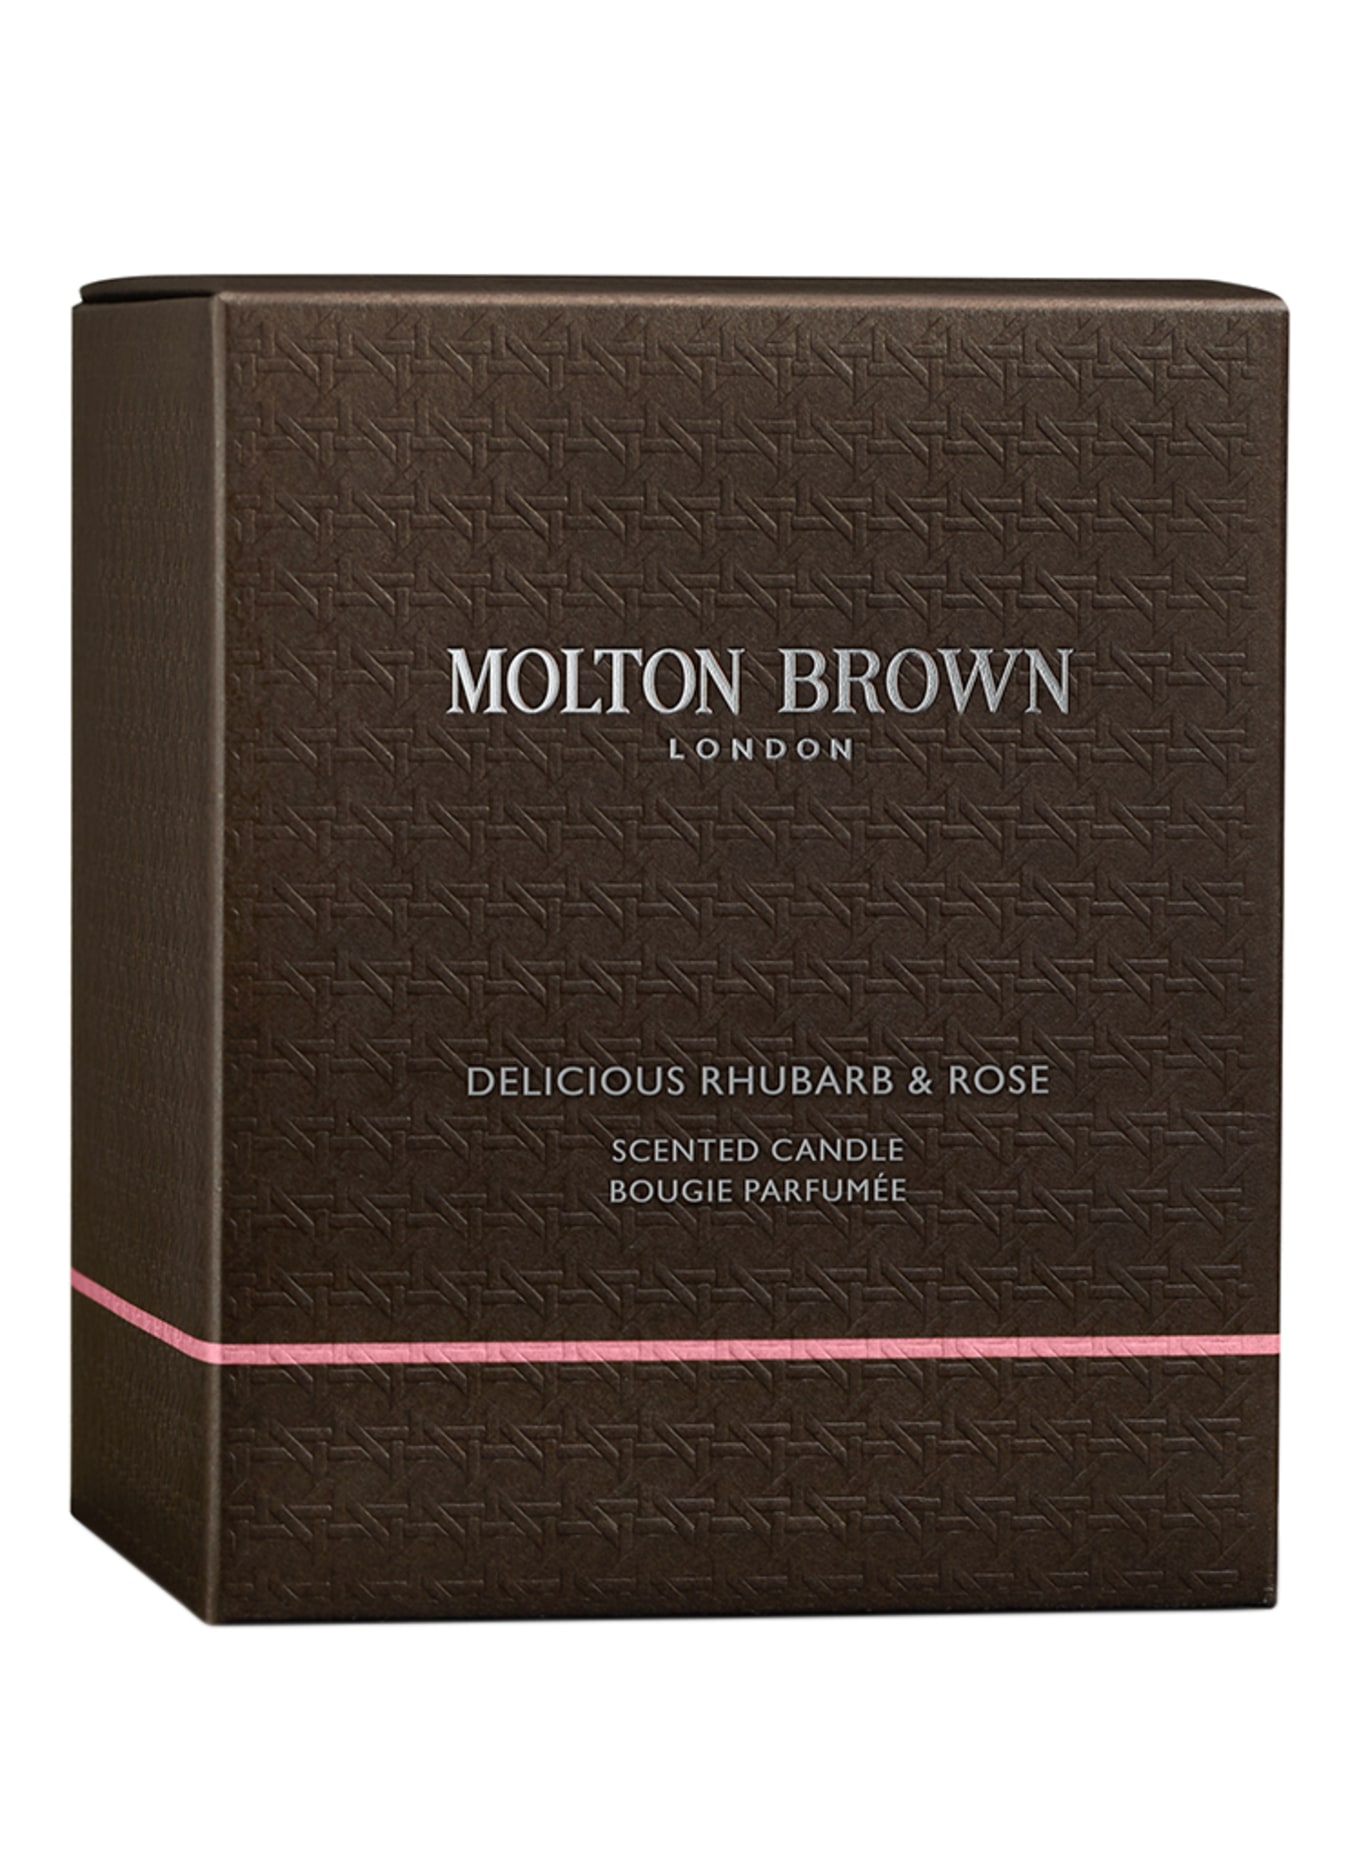 MOLTON BROWN DELICIOUS RHUBARB & ROSE (Obrázek 2)